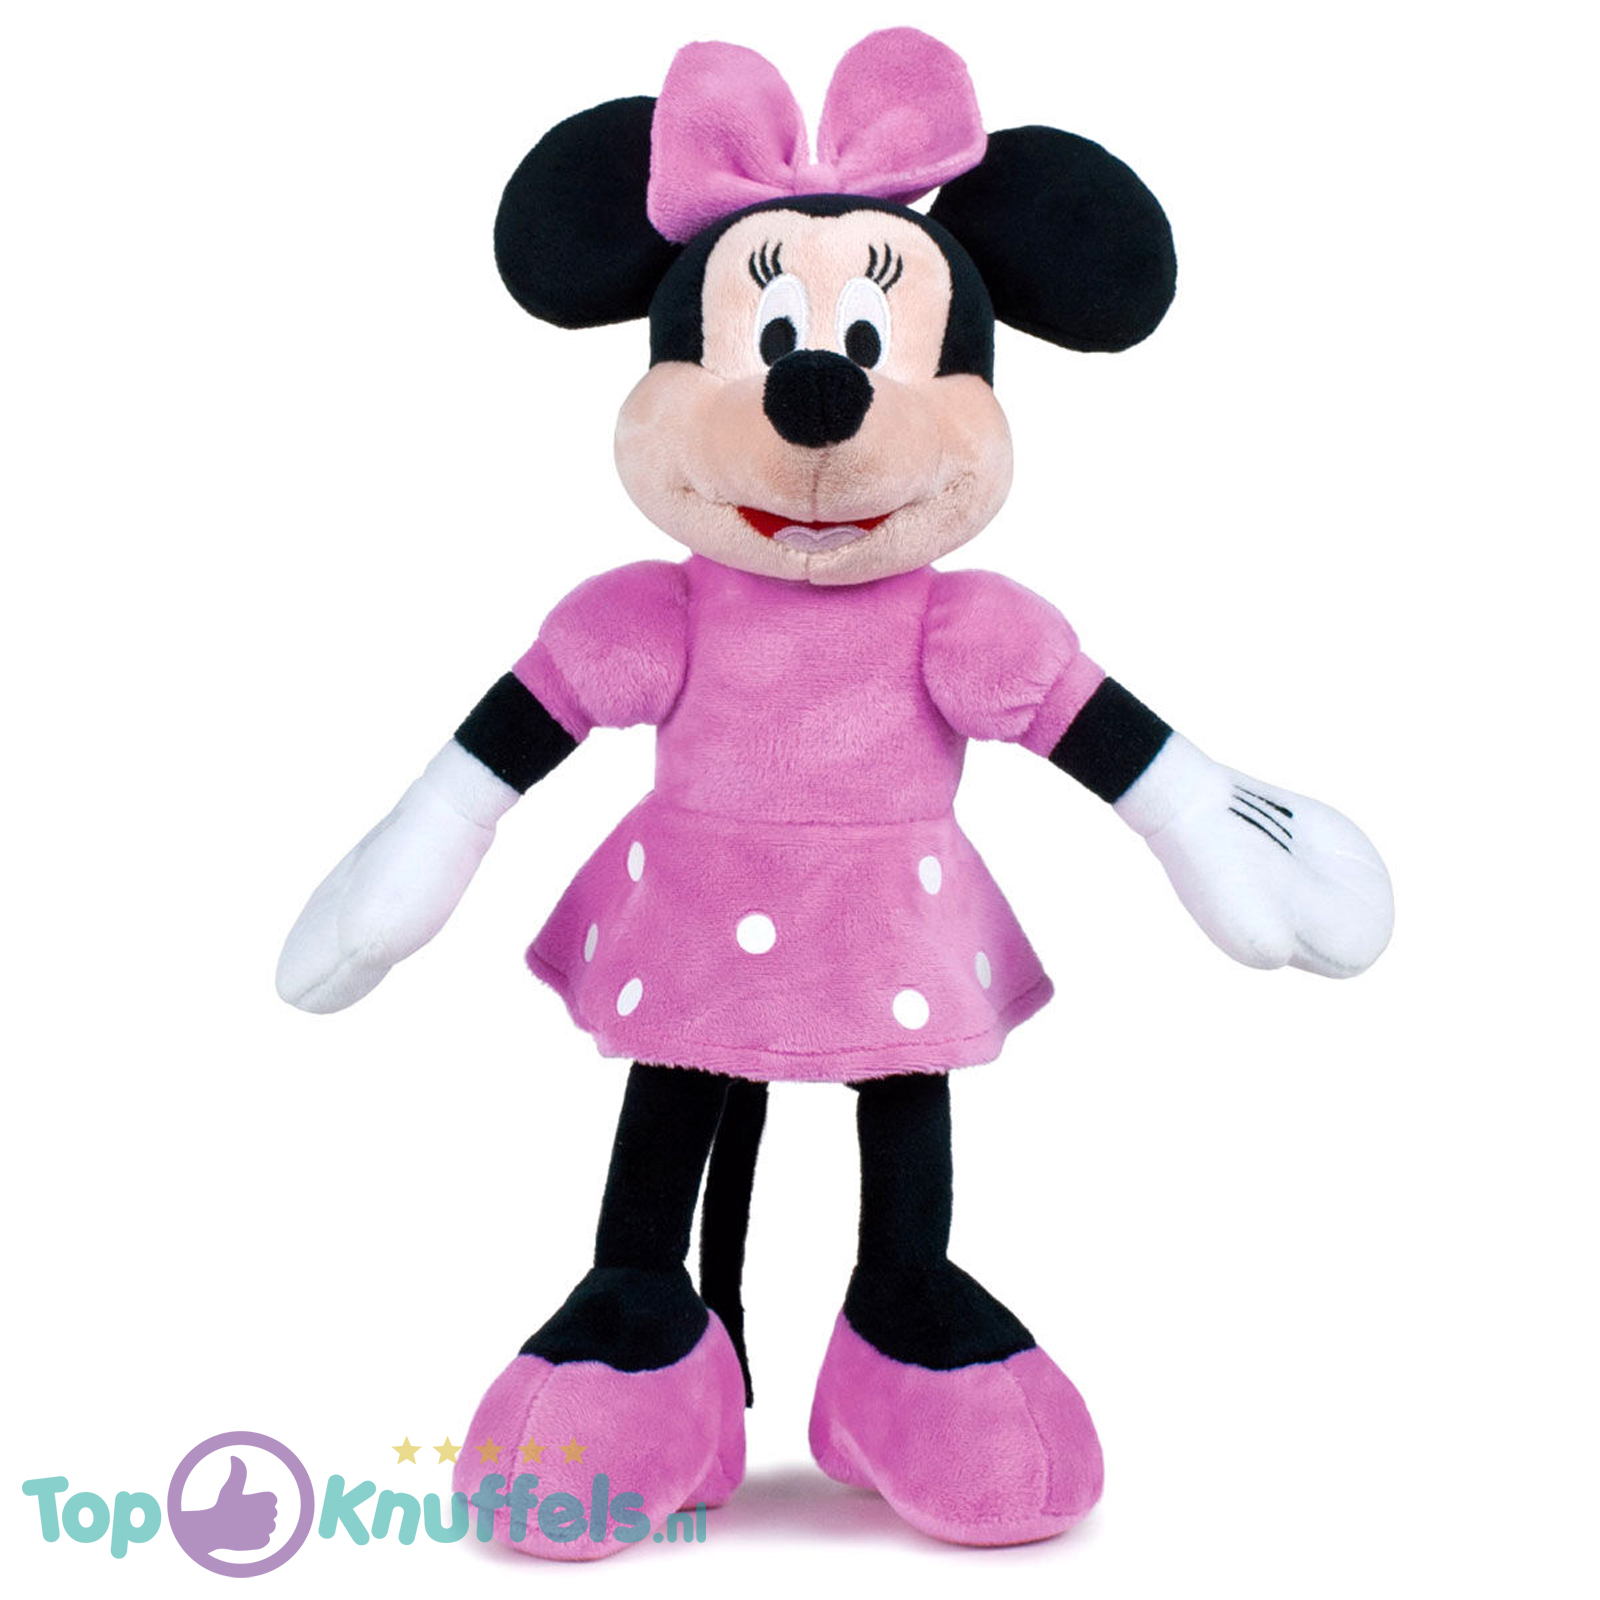 Volwassen belofte woede Minnie Mouse pluche knuffel XL kopen? Topknuffels.nl